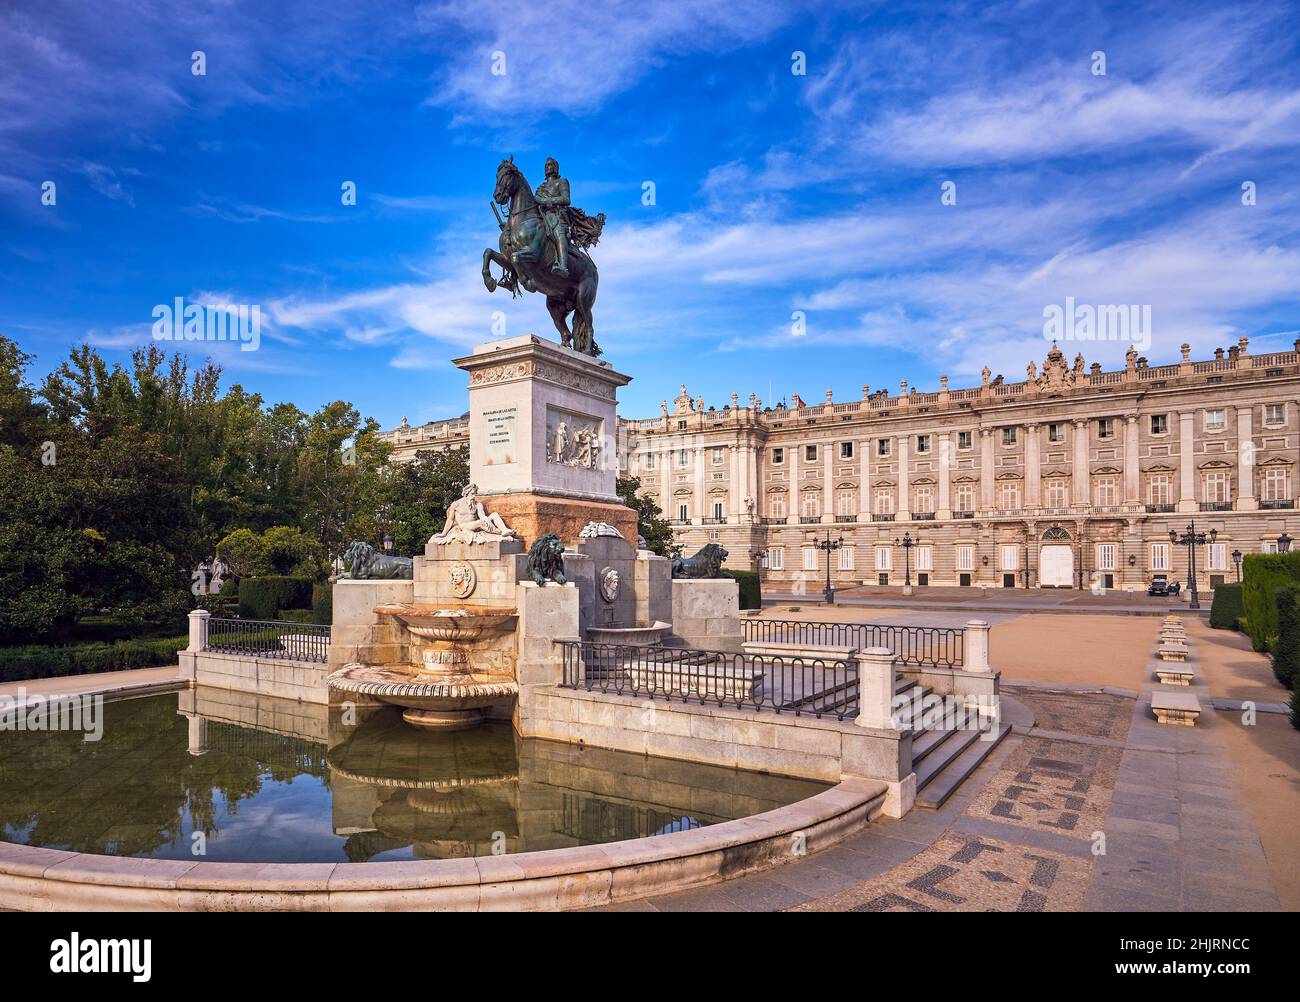 Philip IV statue at the Plaza de Oriente square. Madrid. Spain. Stock Photo